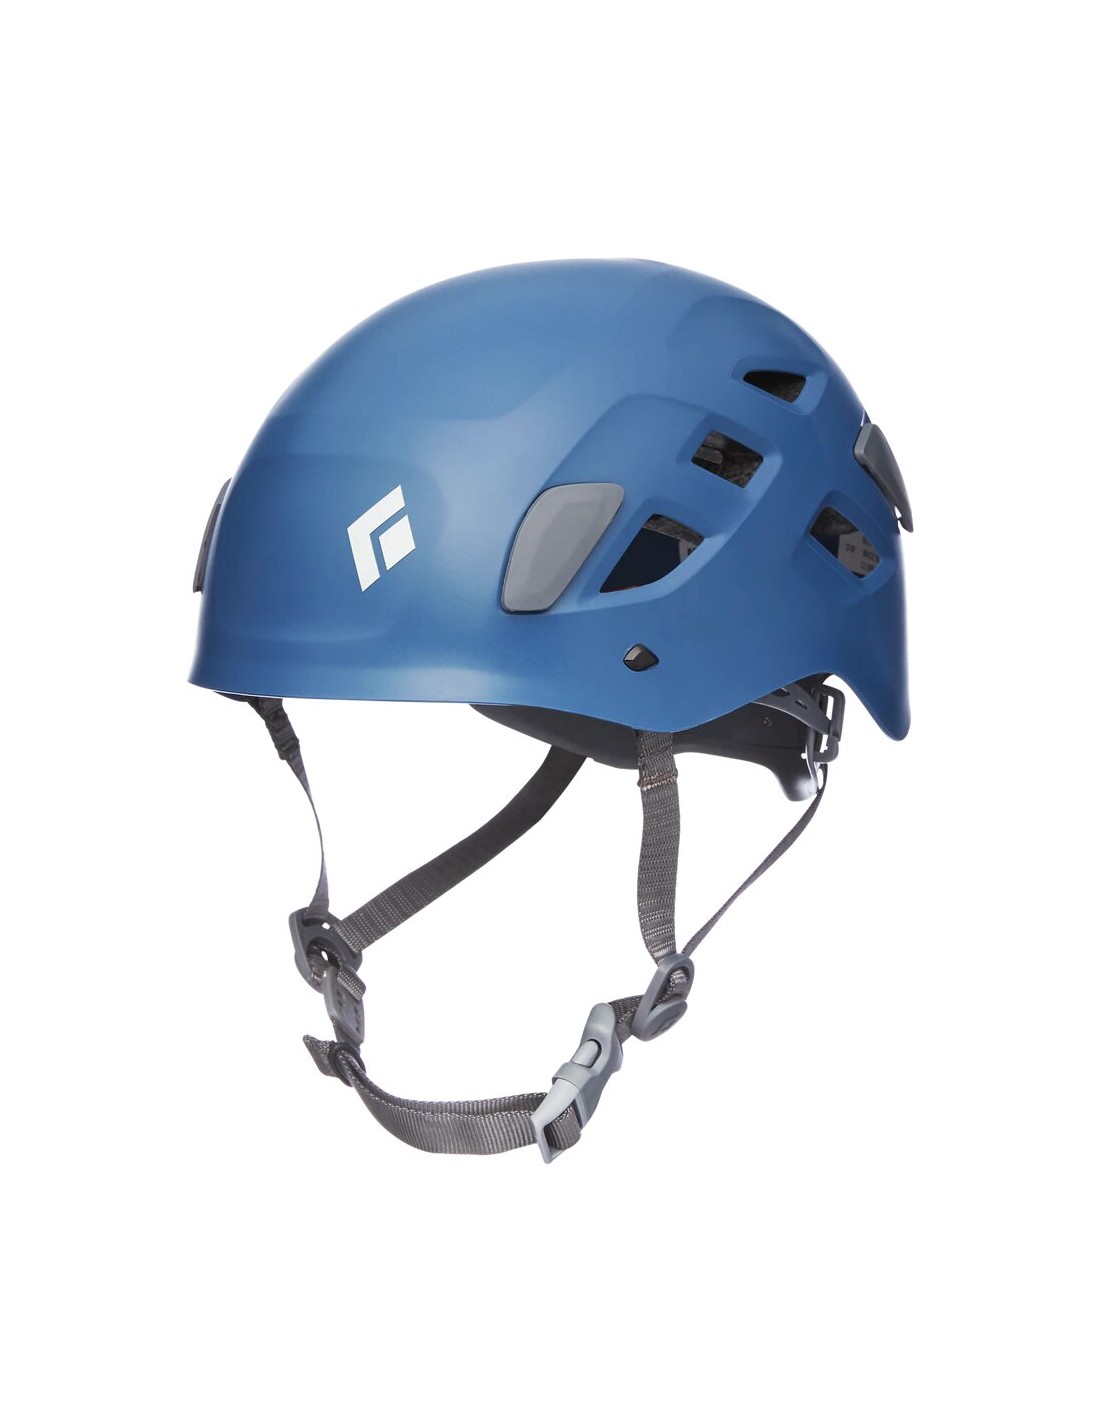 Black Diamond Kletterhelm Half Dome Helmet - Men's, denim Kletterhelmfarbe - Blau, Kletterhelmgröße (Kopfumfang) - ~ 50 - 58 cm, von Black Diamond